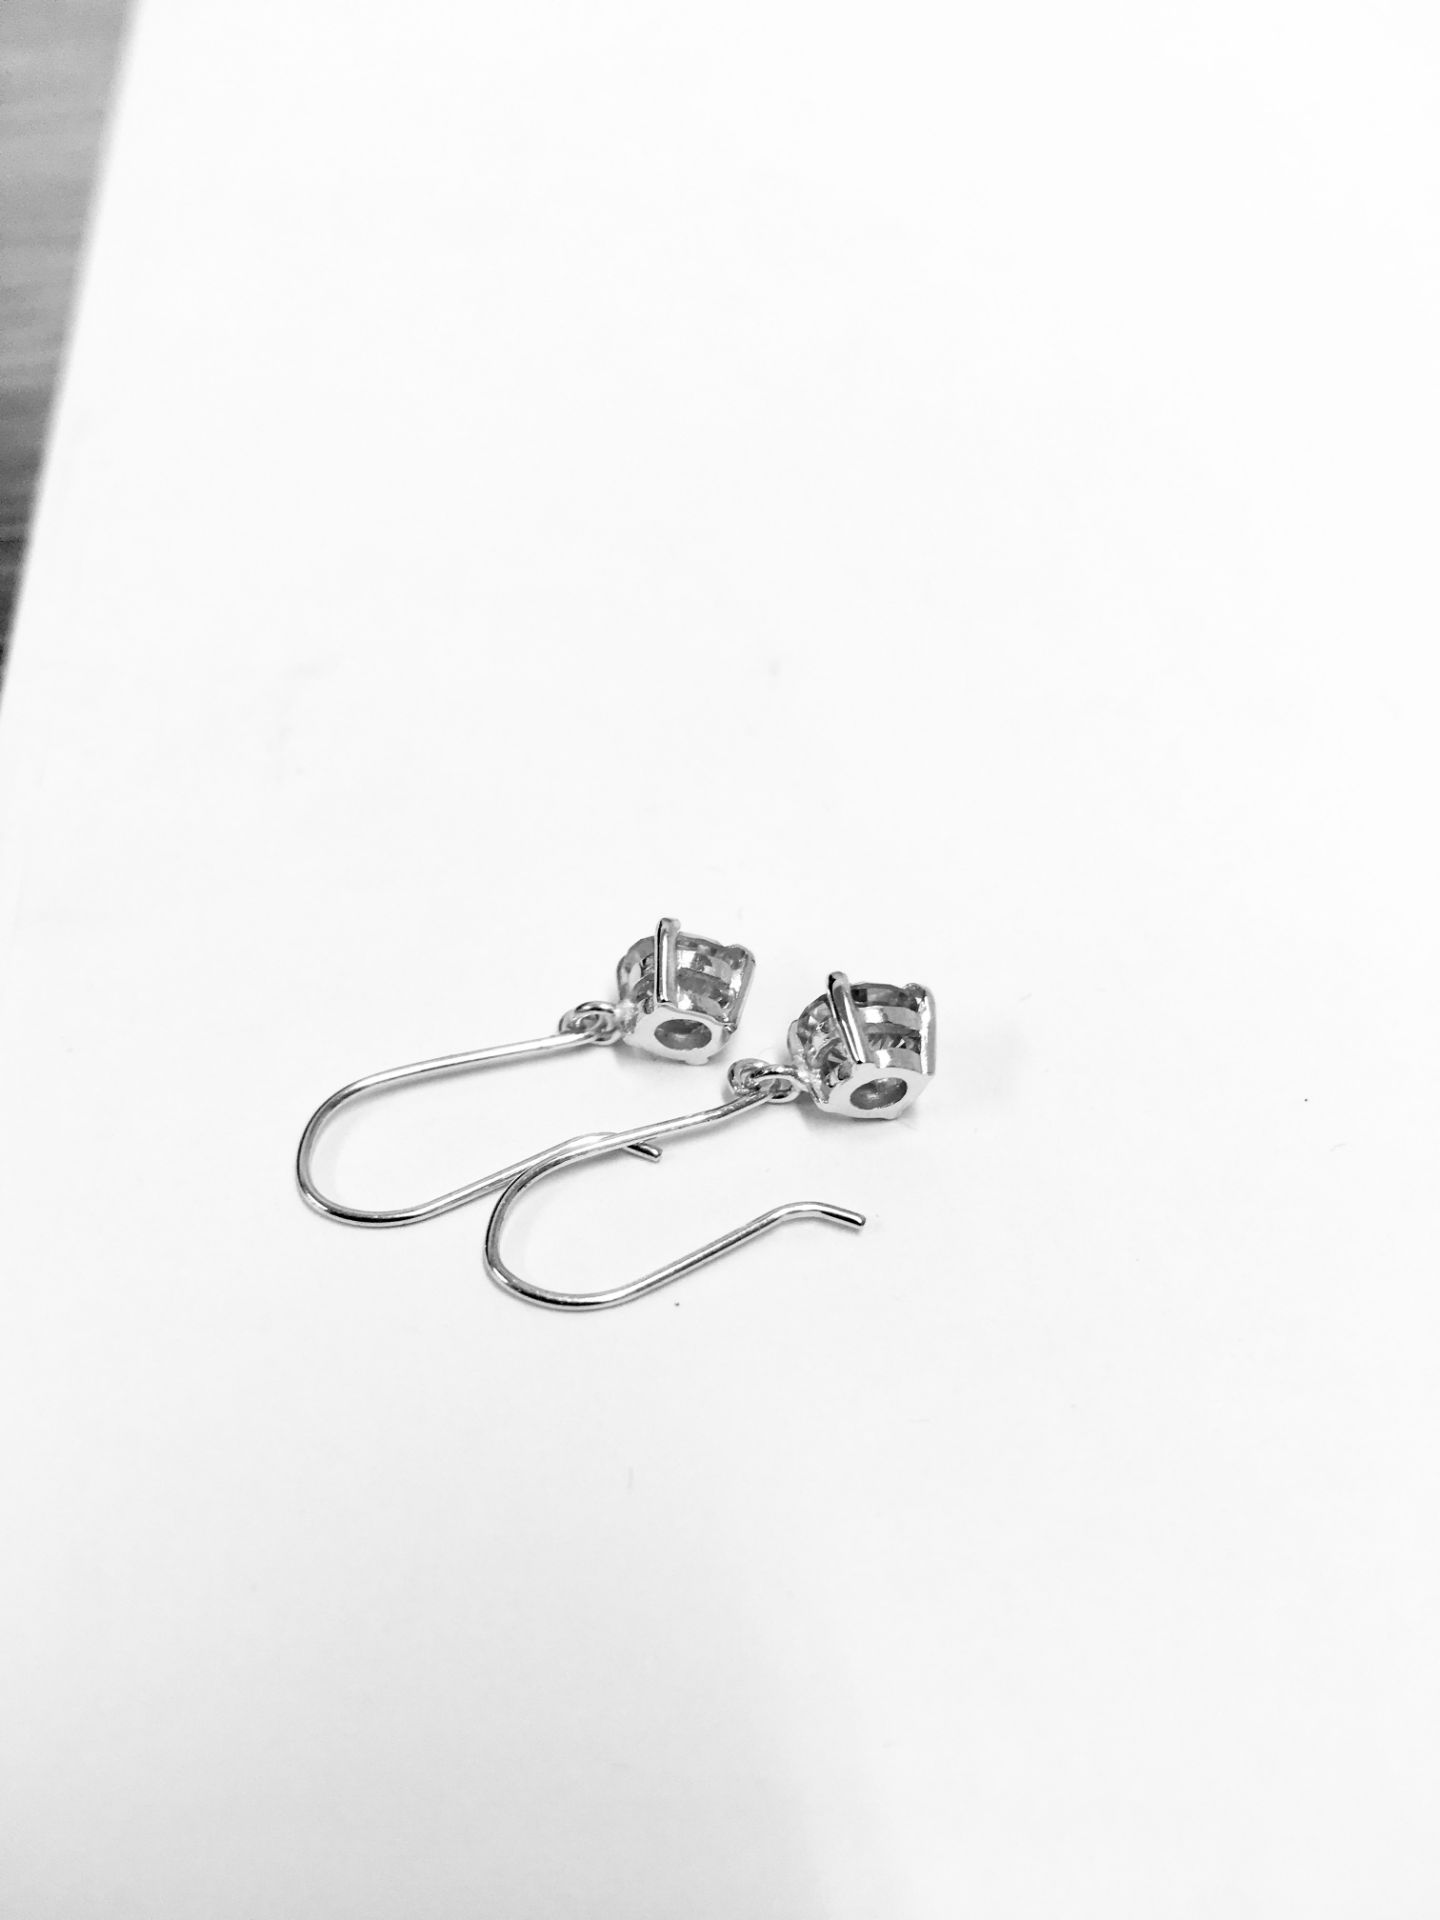 18ct diamond drop earrings 1.00ct total h colour vs enhanced .2gms 18ct 2 gms uk made appraisal - Image 4 of 5